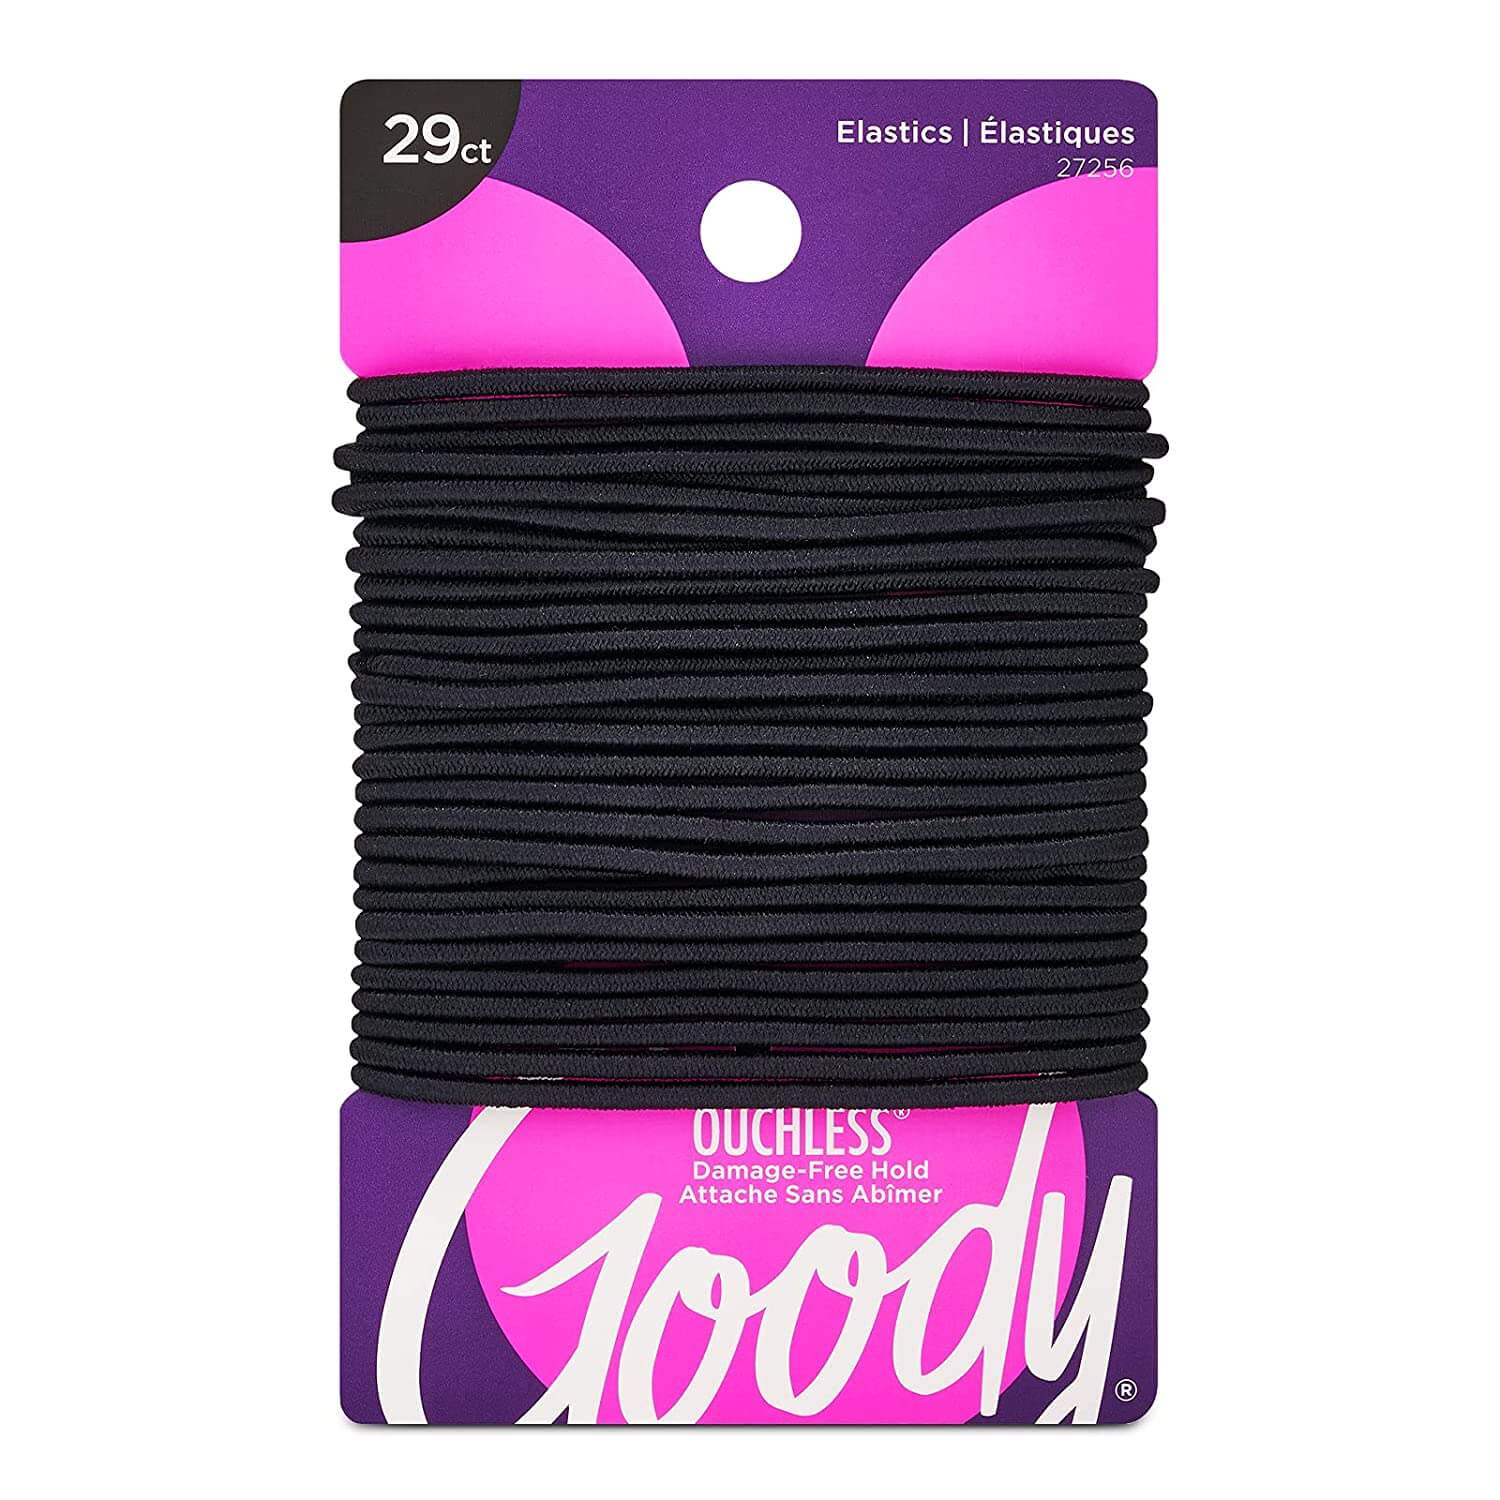 Goody’s Ouchless Elastic Hair Ties